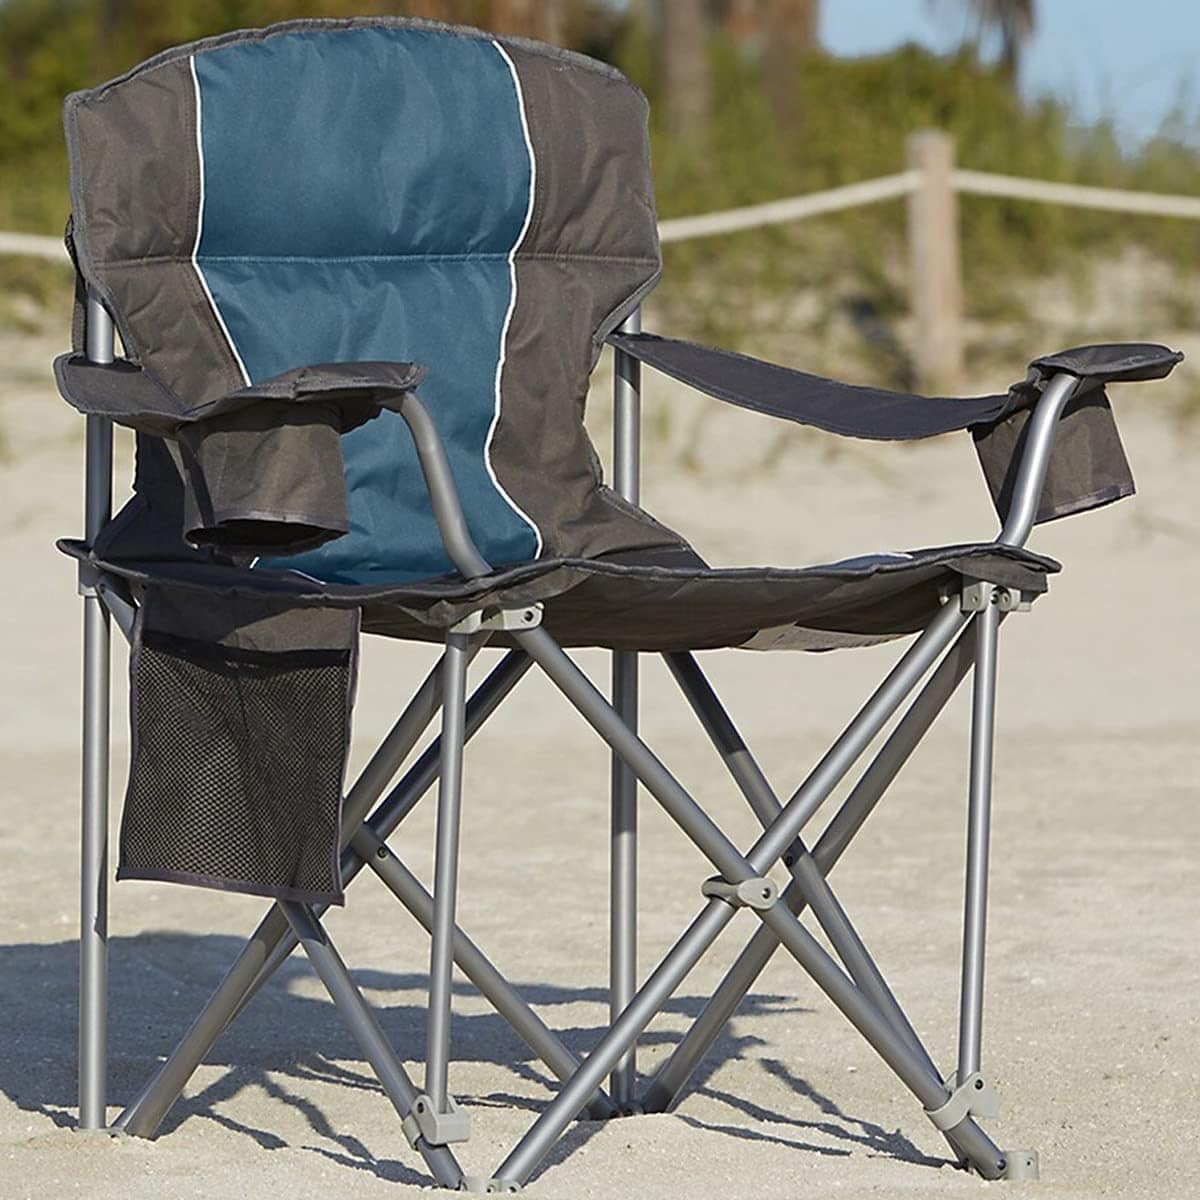 LivingXL 500-lb Capacity Portable Chair